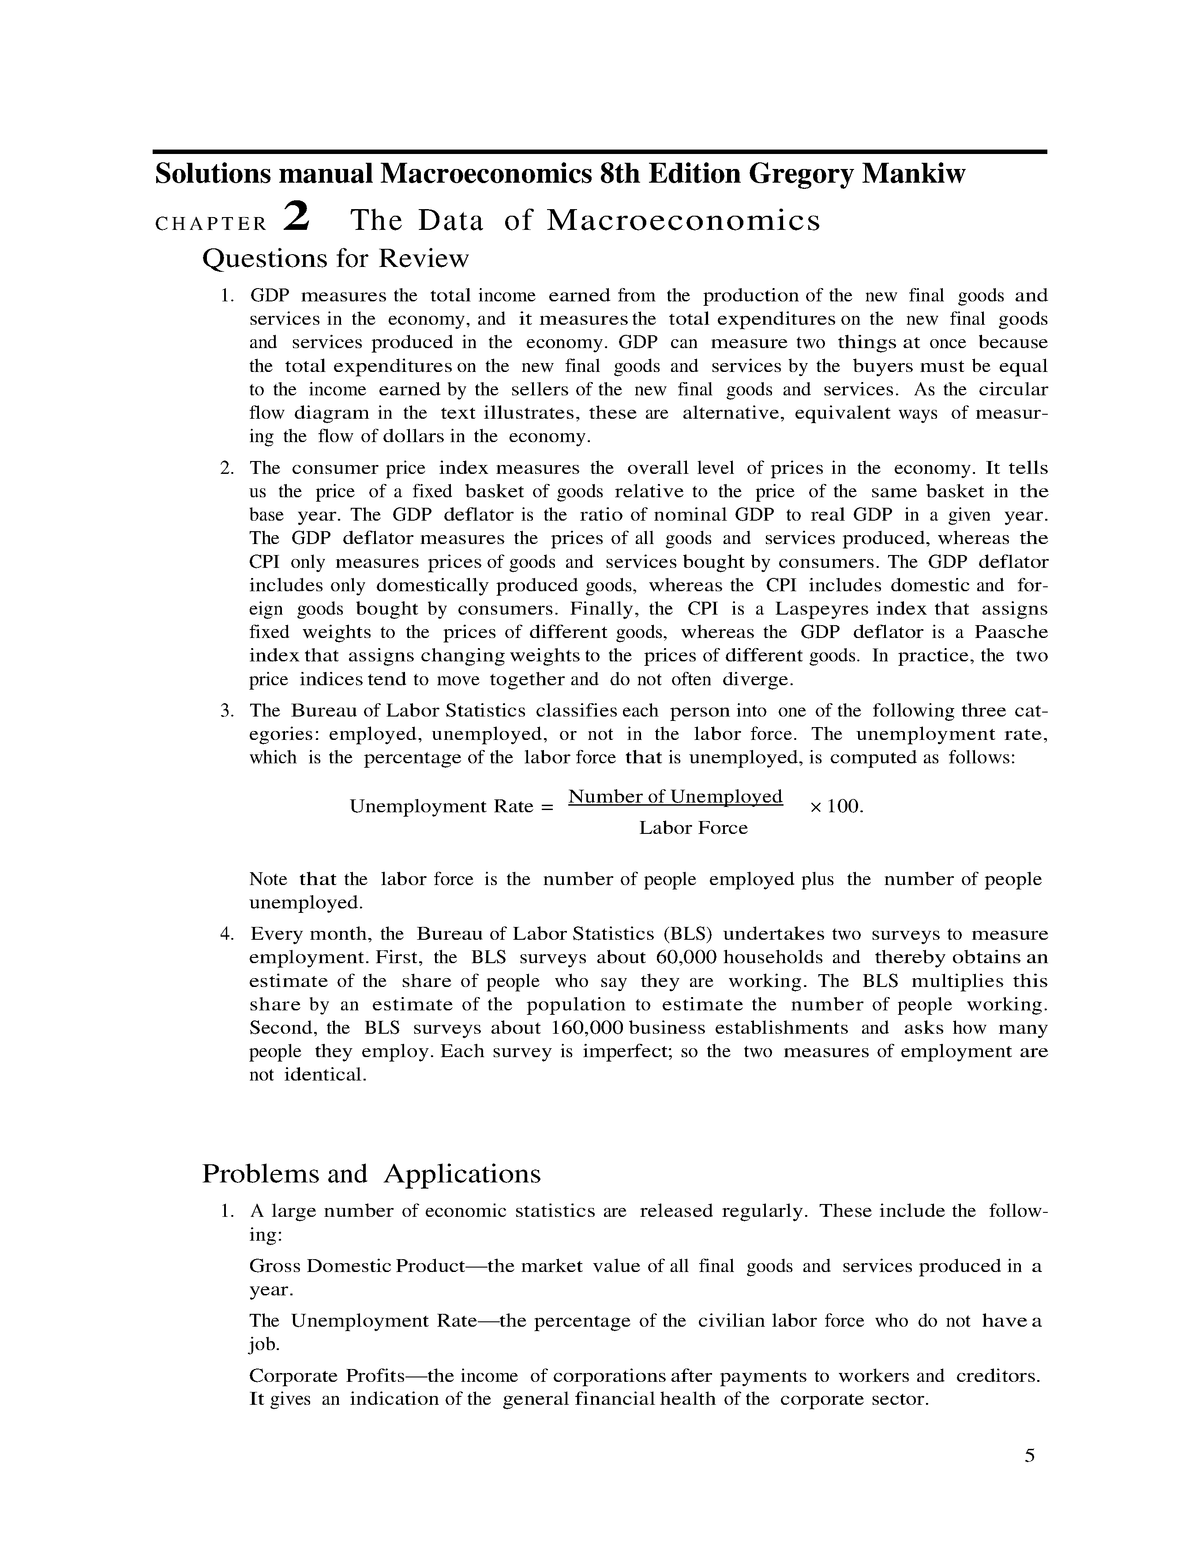 Mankiw macroeconomics 8th edition answer key solutions manual StuDocu